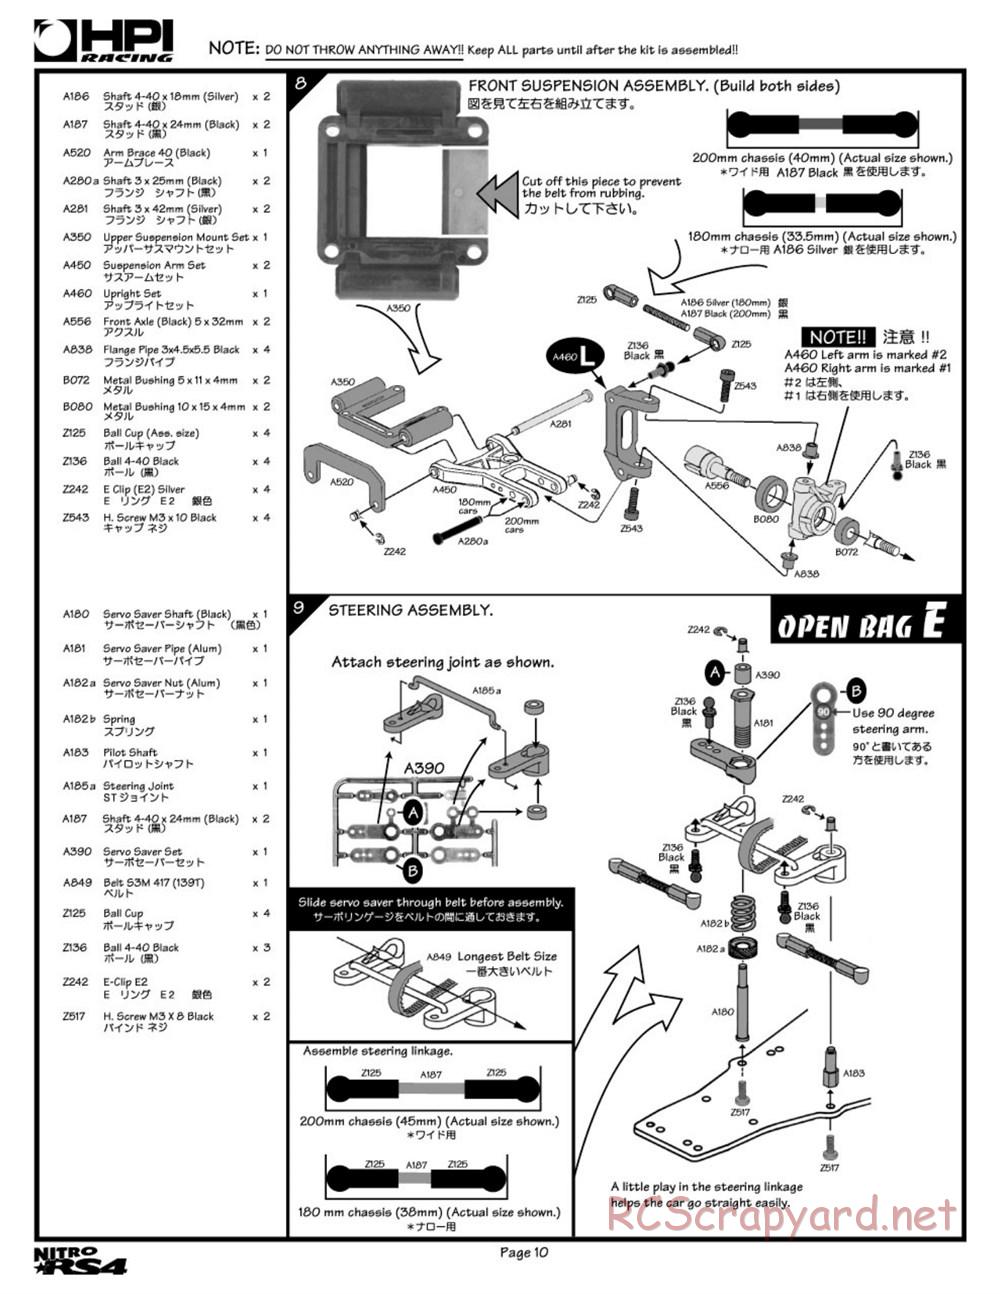 HPI - Nitro RS4 - Manual - Page 10